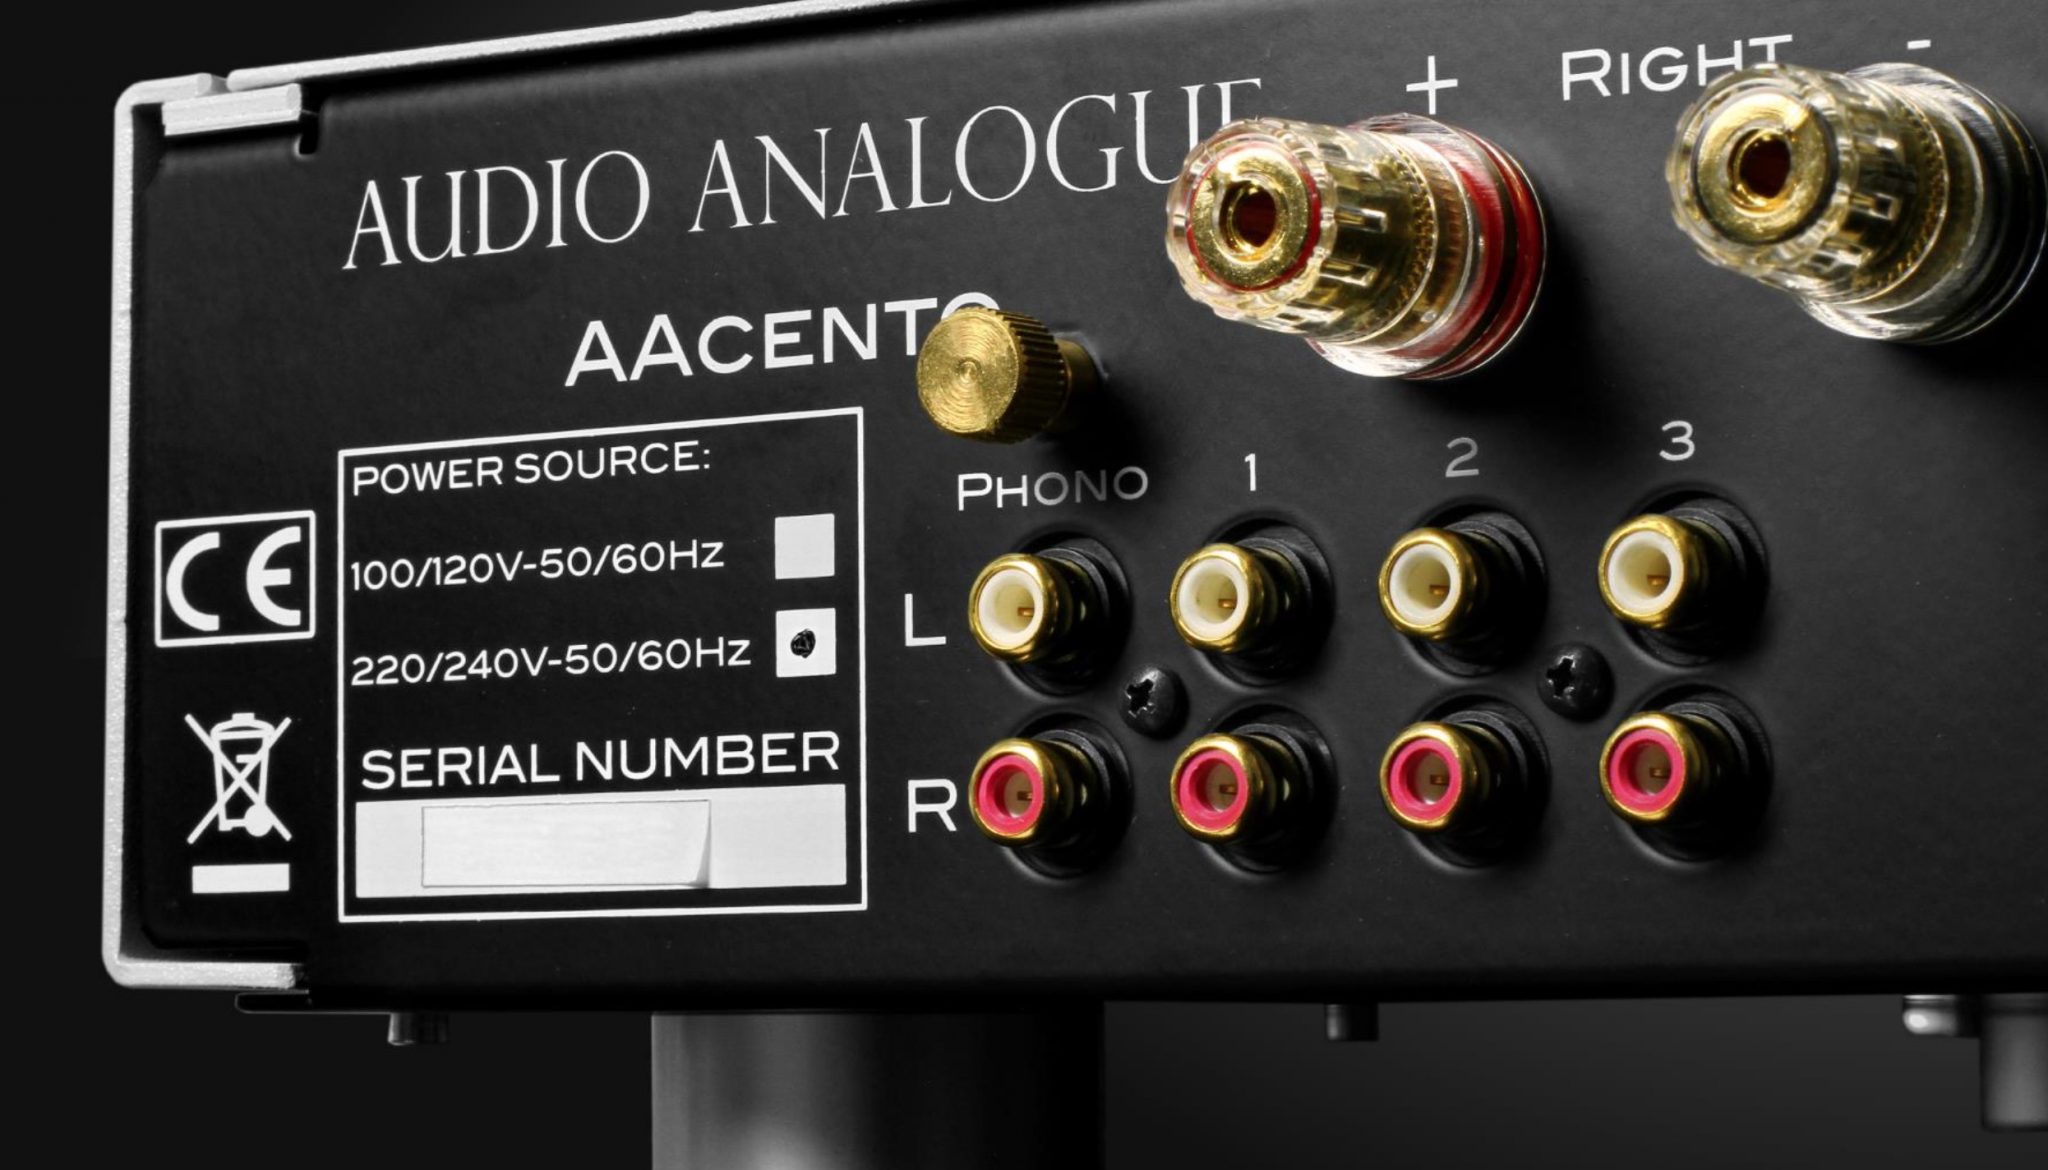 Audio Analogue AAcento PureAA integrated amp